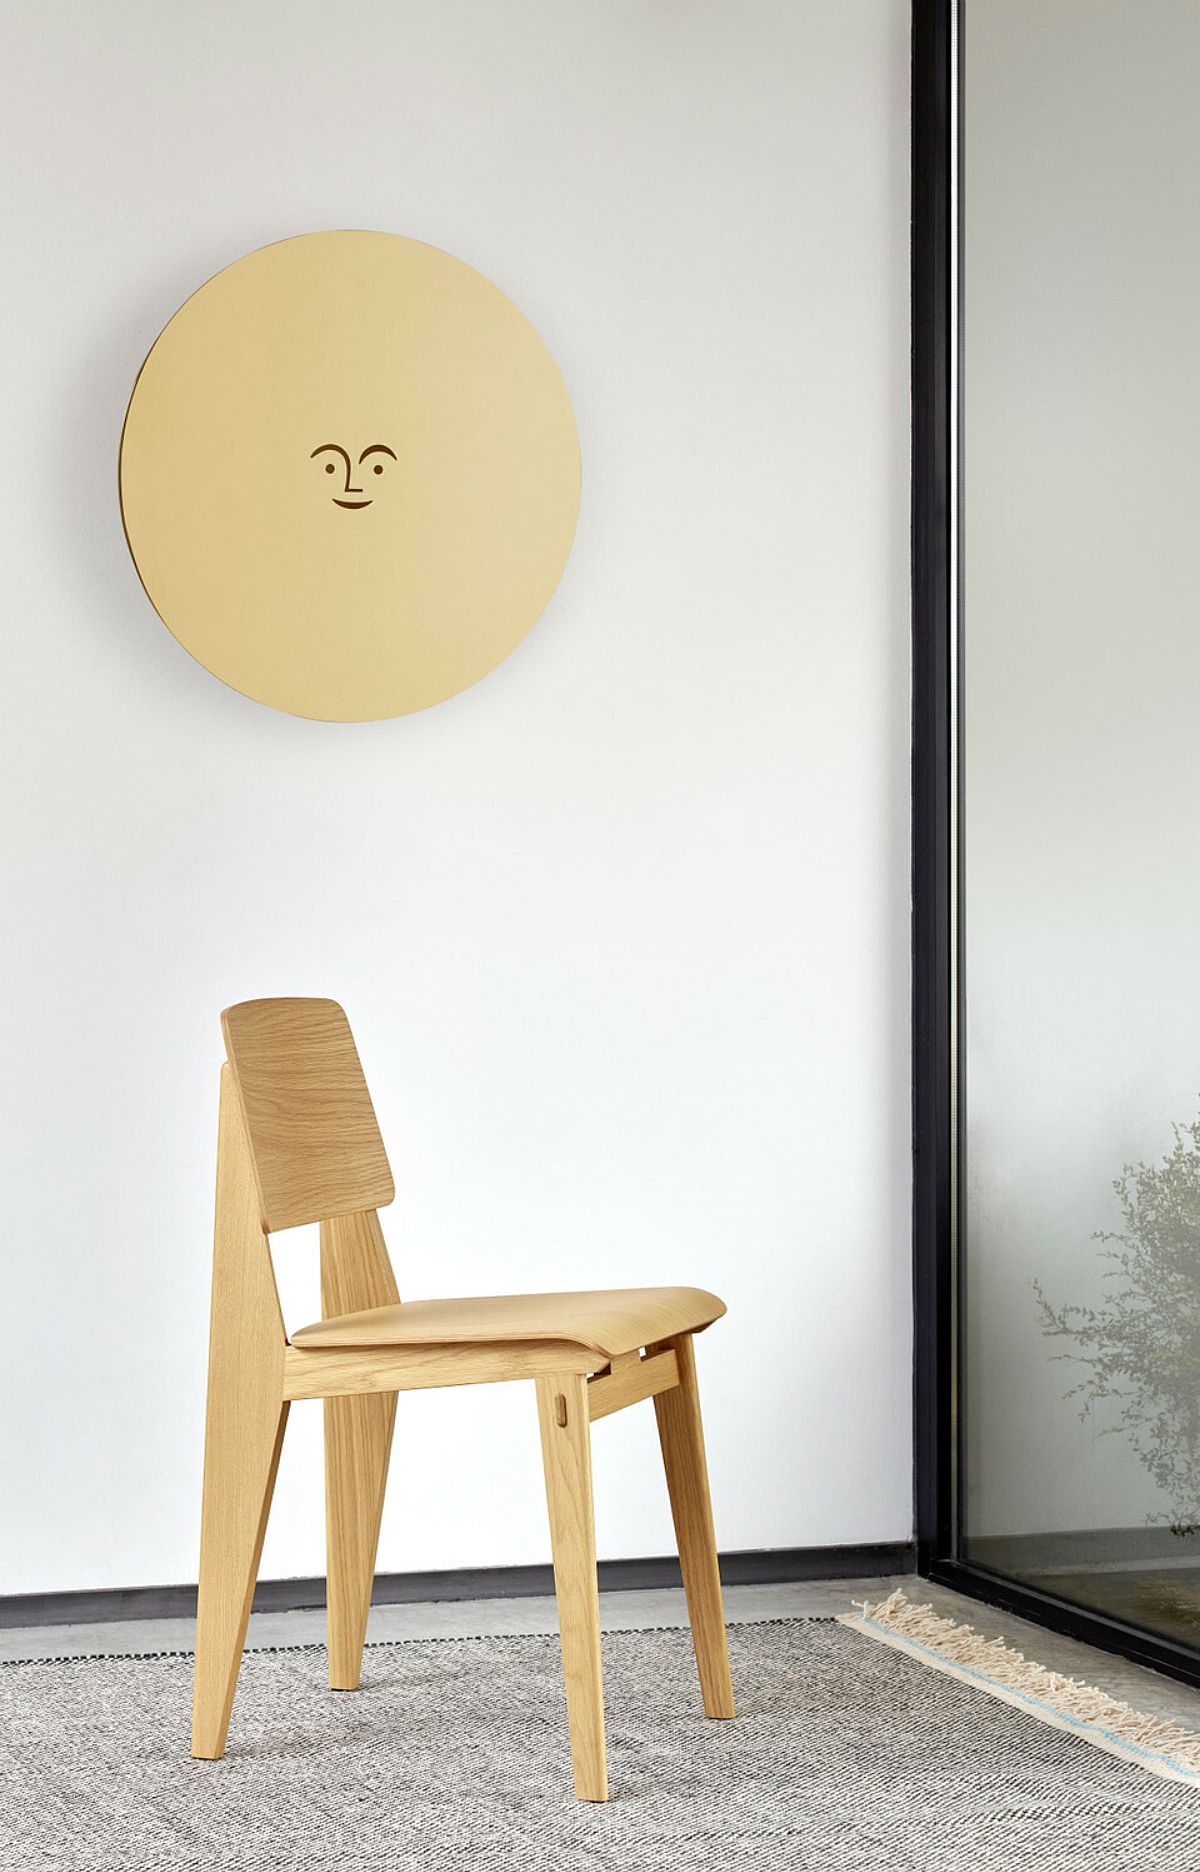 Chaise tout bois is de enige stoel volledig in hout van legendarisch ontwerper Jean Prouvé.